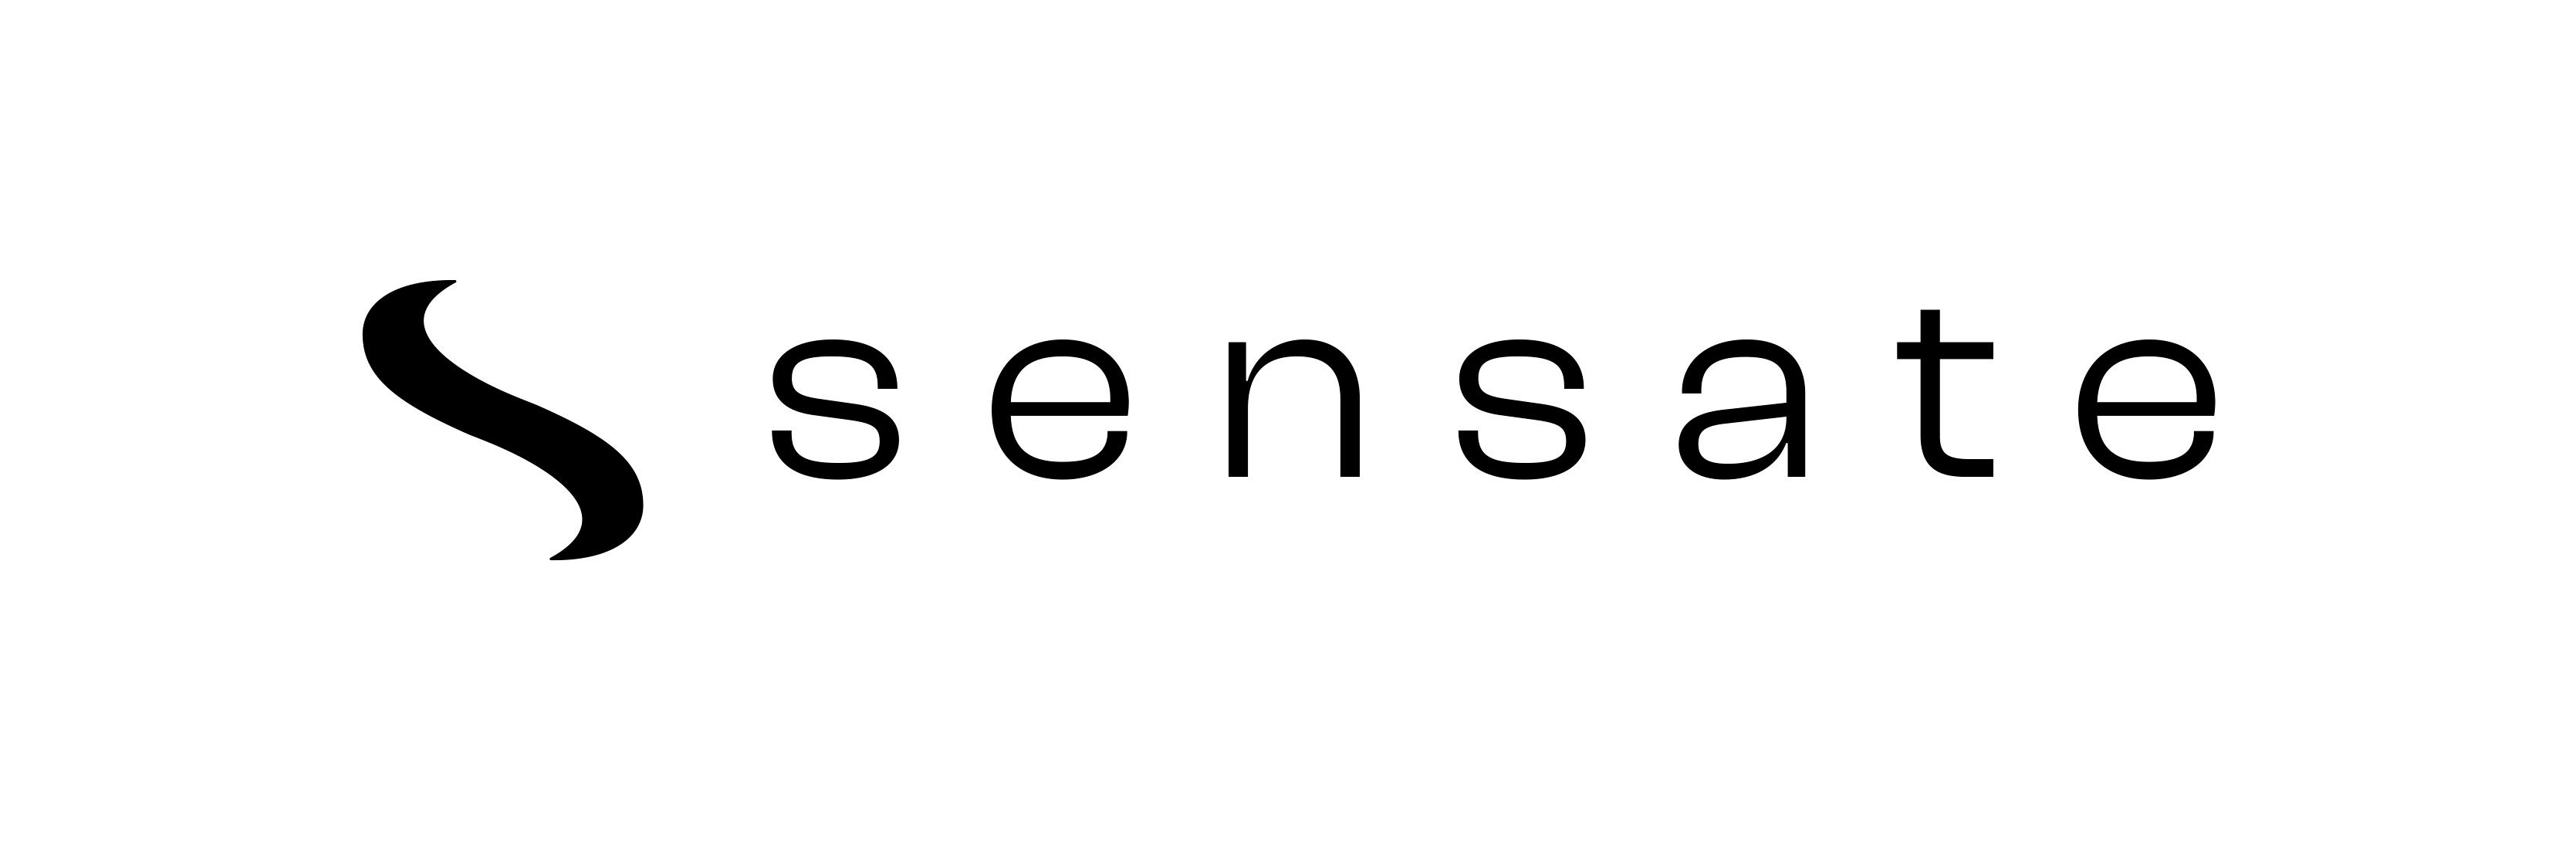 Sensate logo